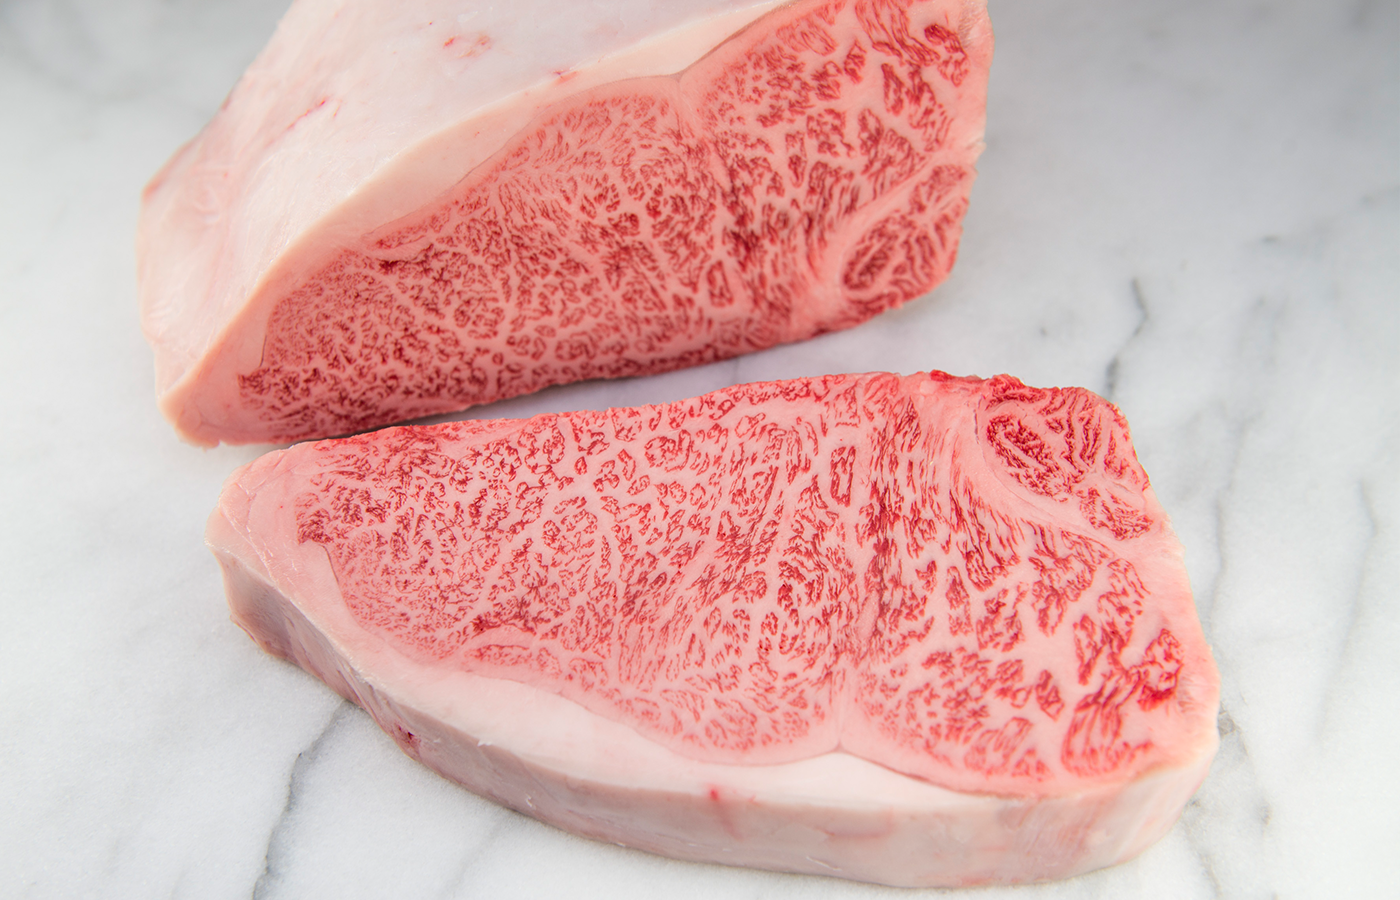 Miyazakigyu | A5 Wagyu Beef Striploin Steak (Thick Cut)